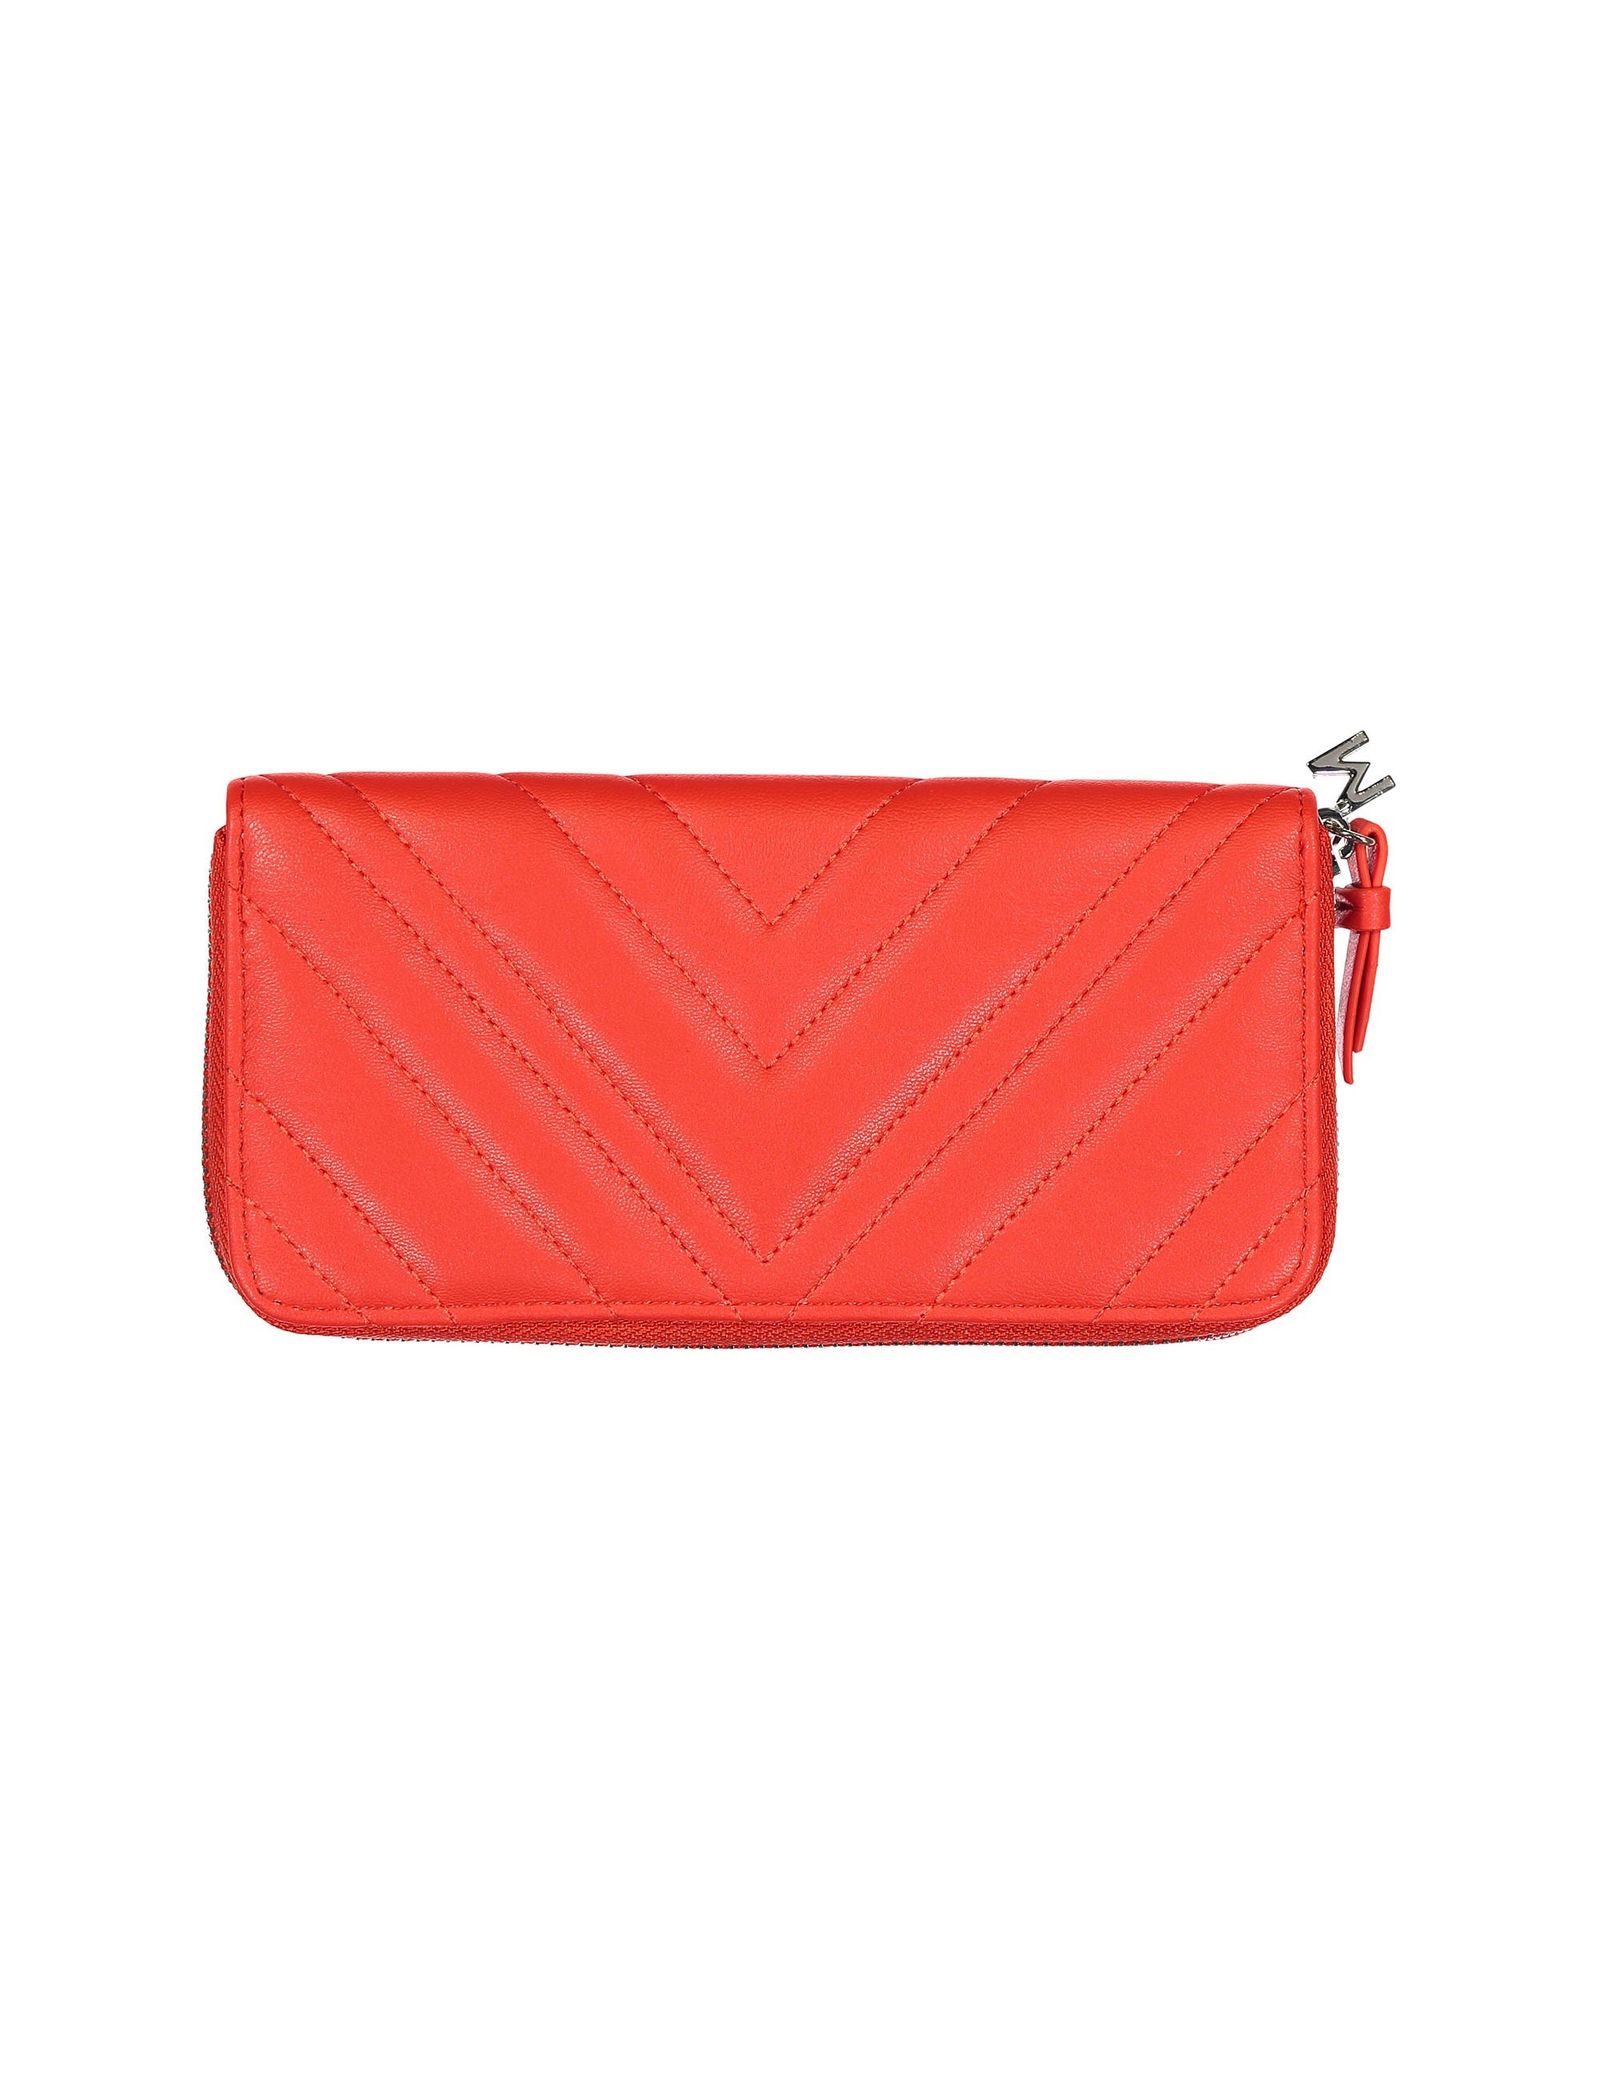 کیف پول زیپ دار زنانه - مانگو - قرمز نارنجي - 1